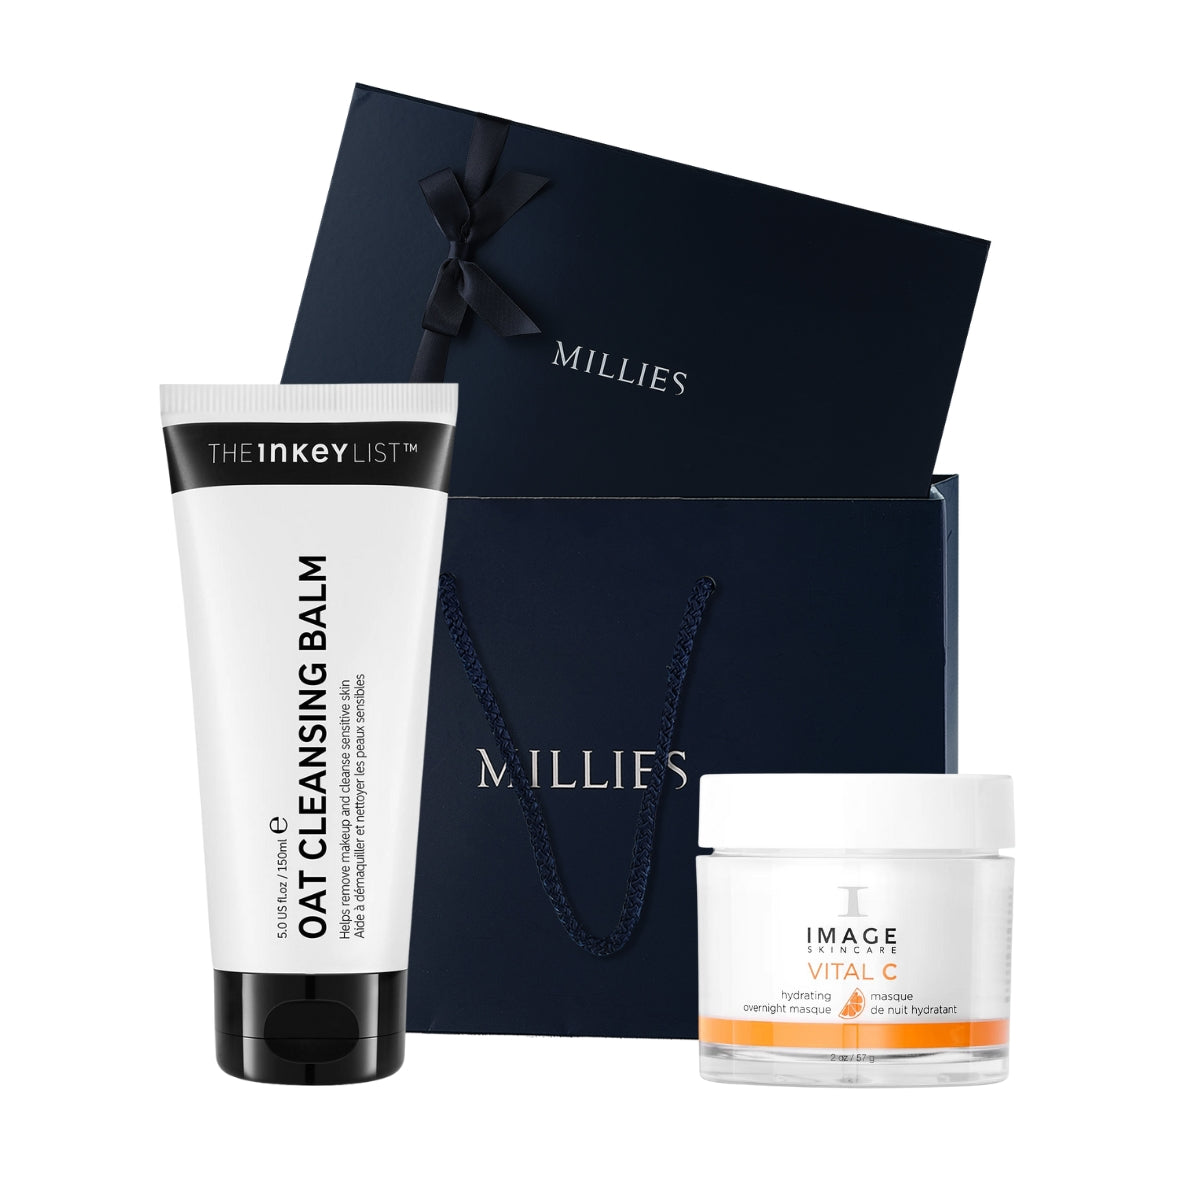 Millies Skincare Essentials Gift Box